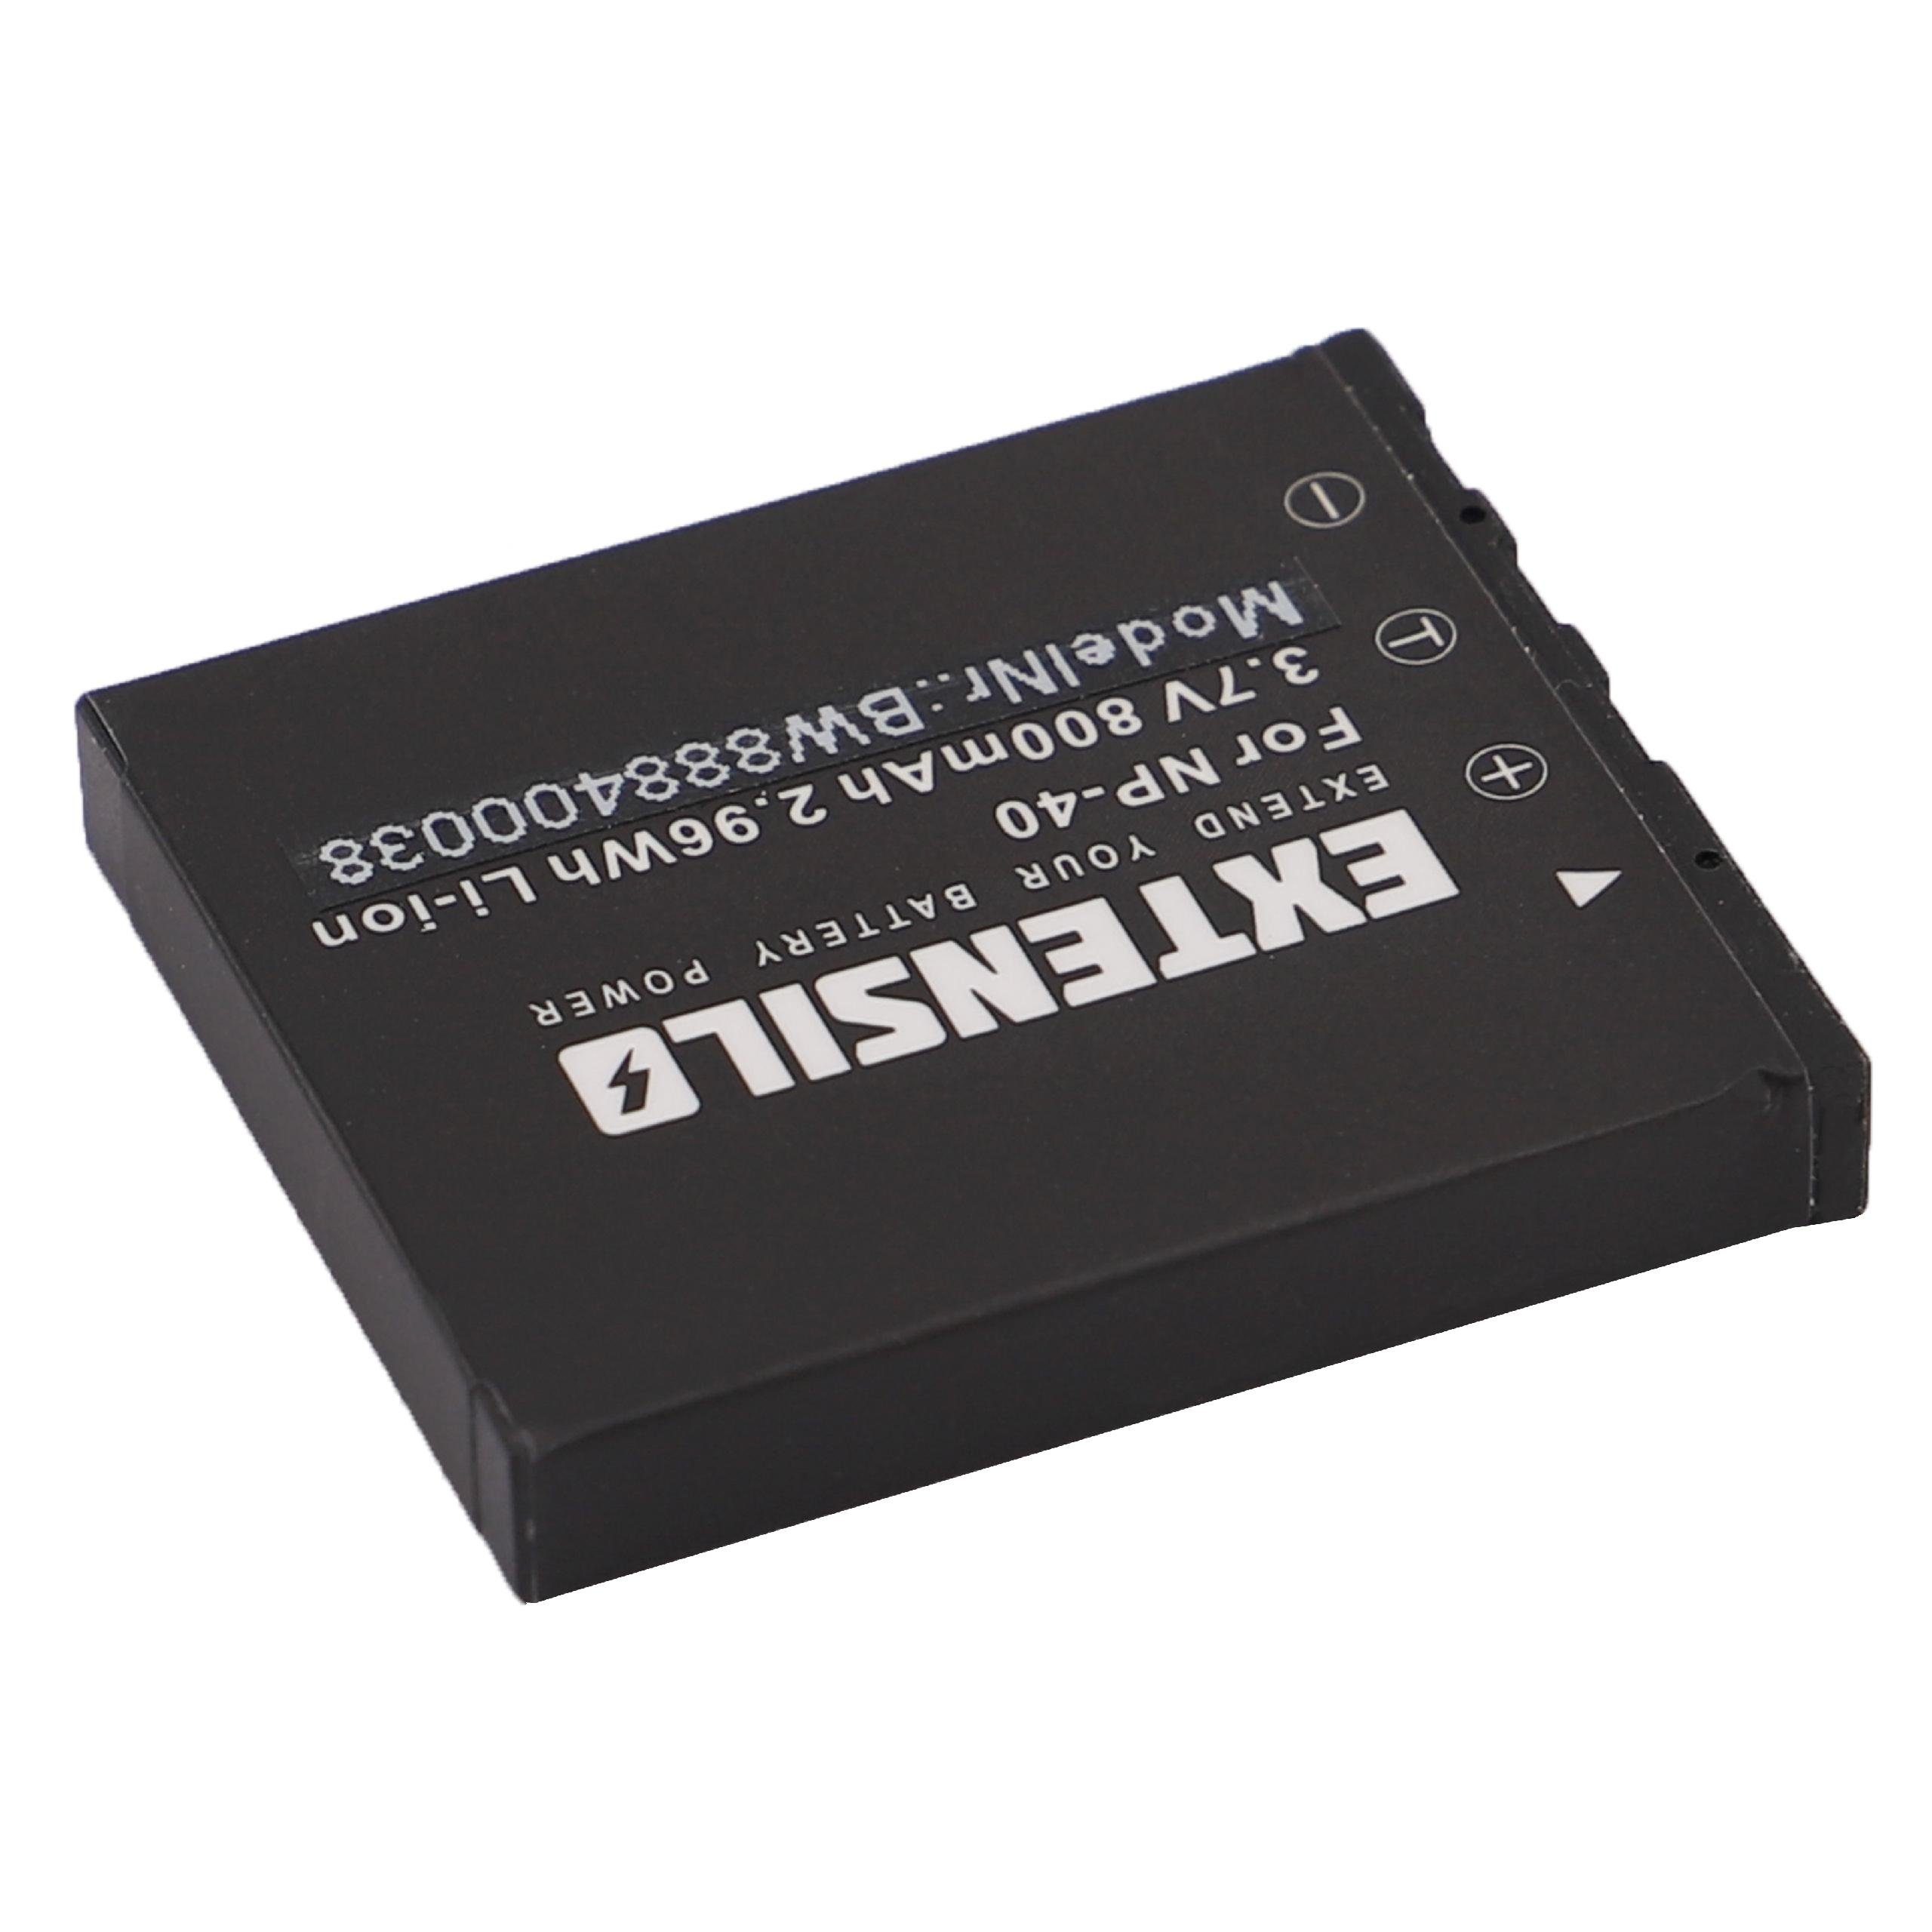 800 kompatibel mit Kamera-Akku Li-Ion 10.3 LB-5030, Luxmedia DCZ (3,7 Extensilo Praktica V) mAh